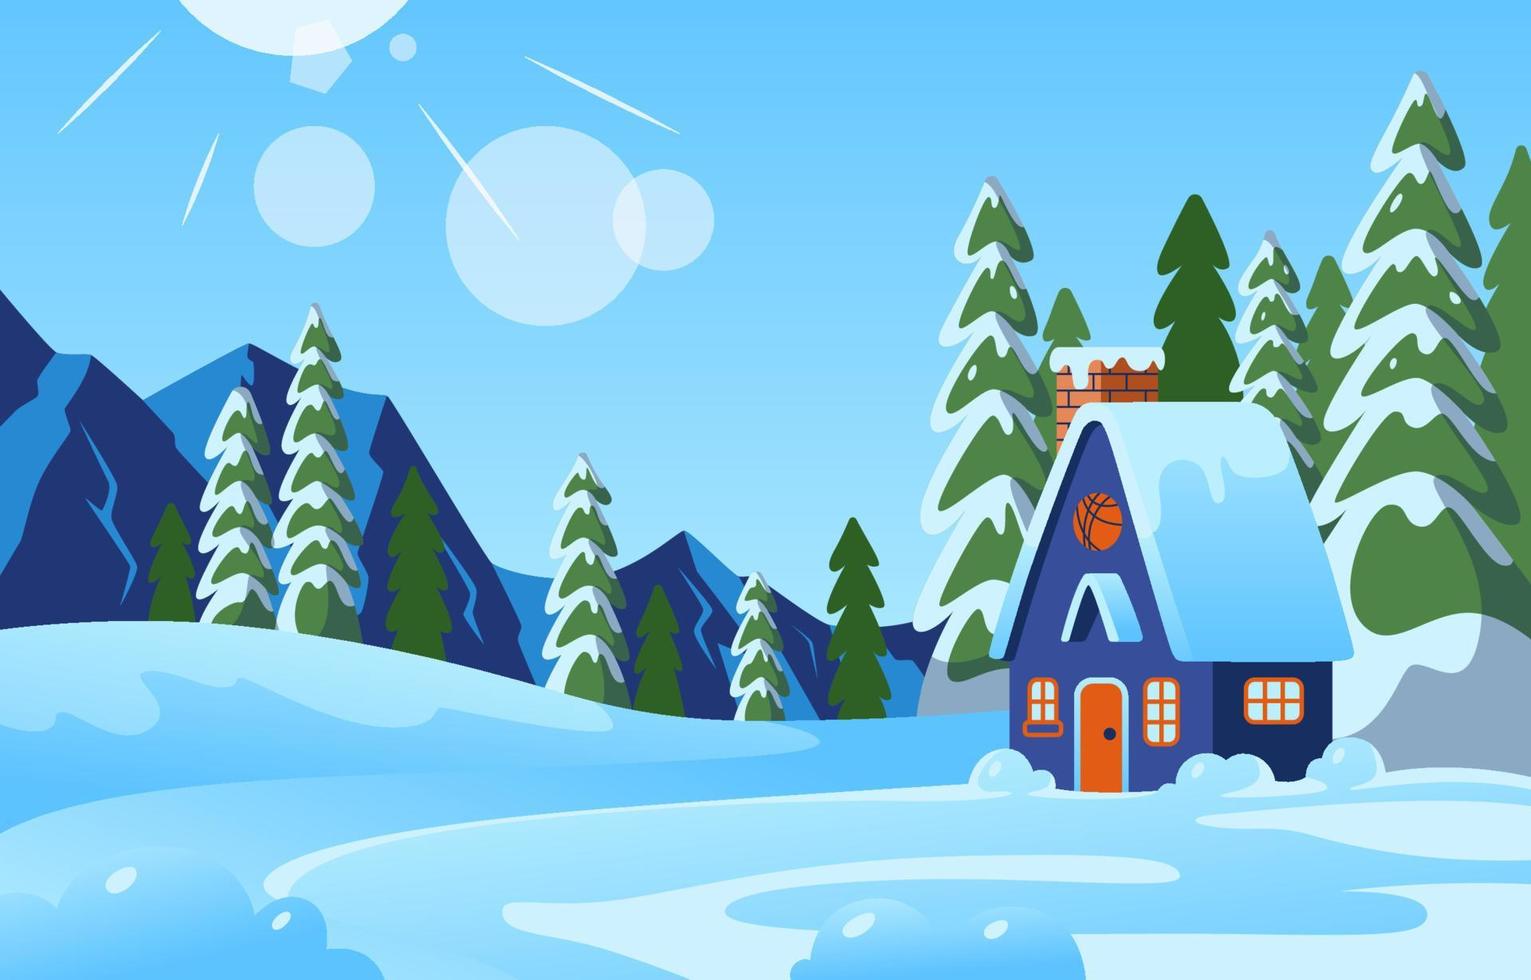 Snowy House in Winter Scenery vector